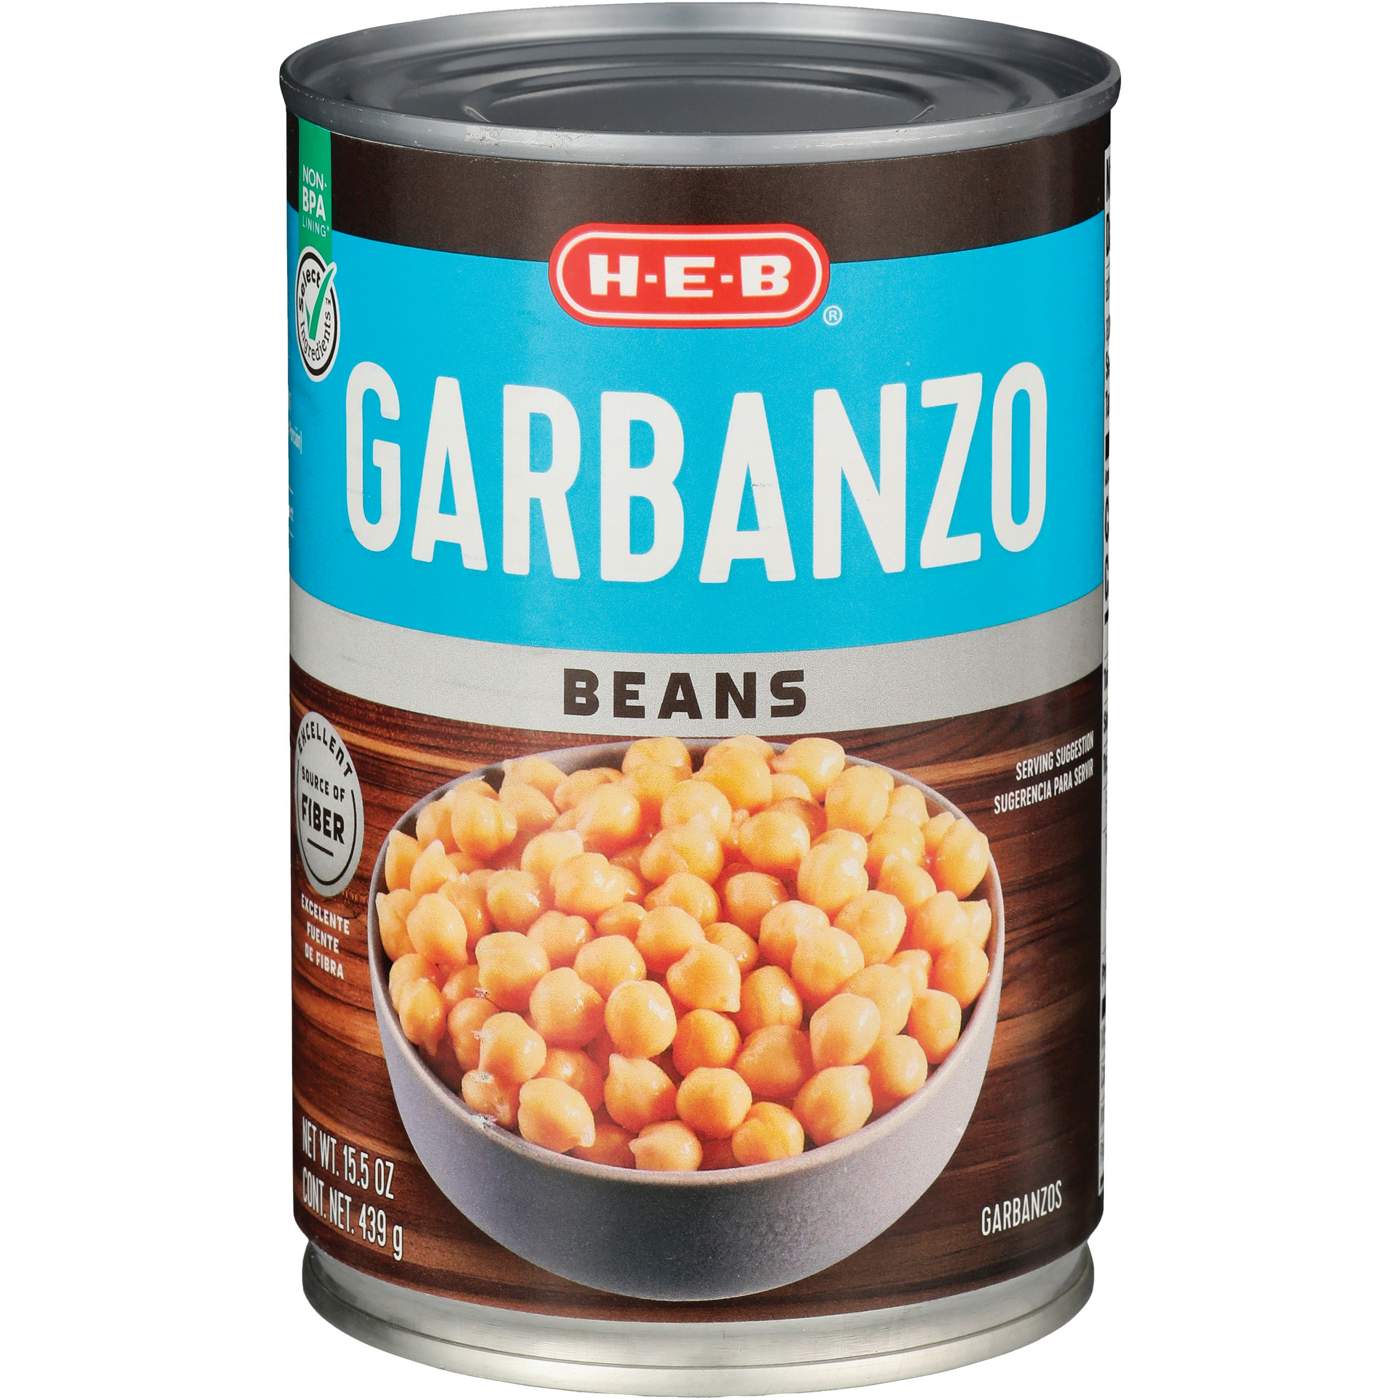 H-E-B Garbanzo Beans; image 2 of 2